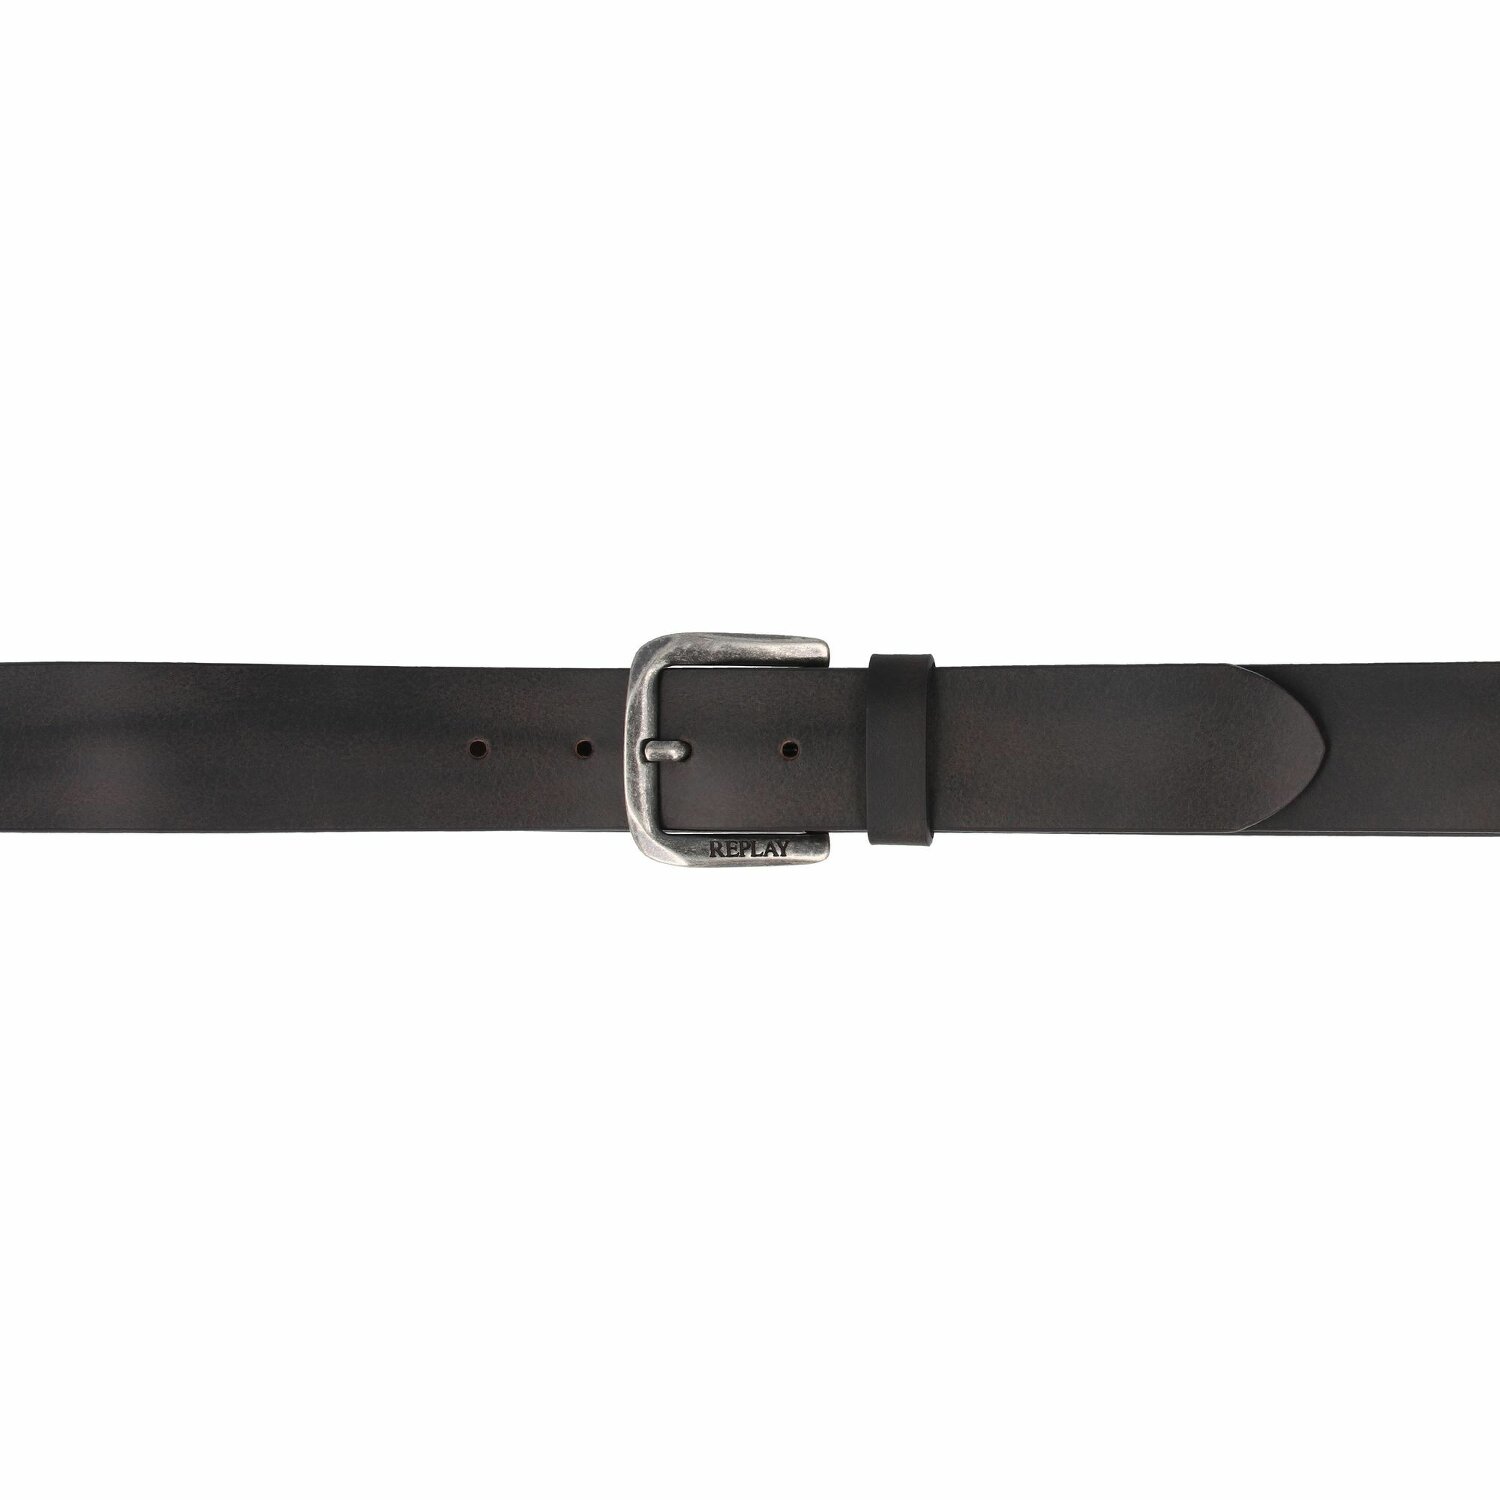 Replay Gürtel Leder black brown | 100 cm | bei